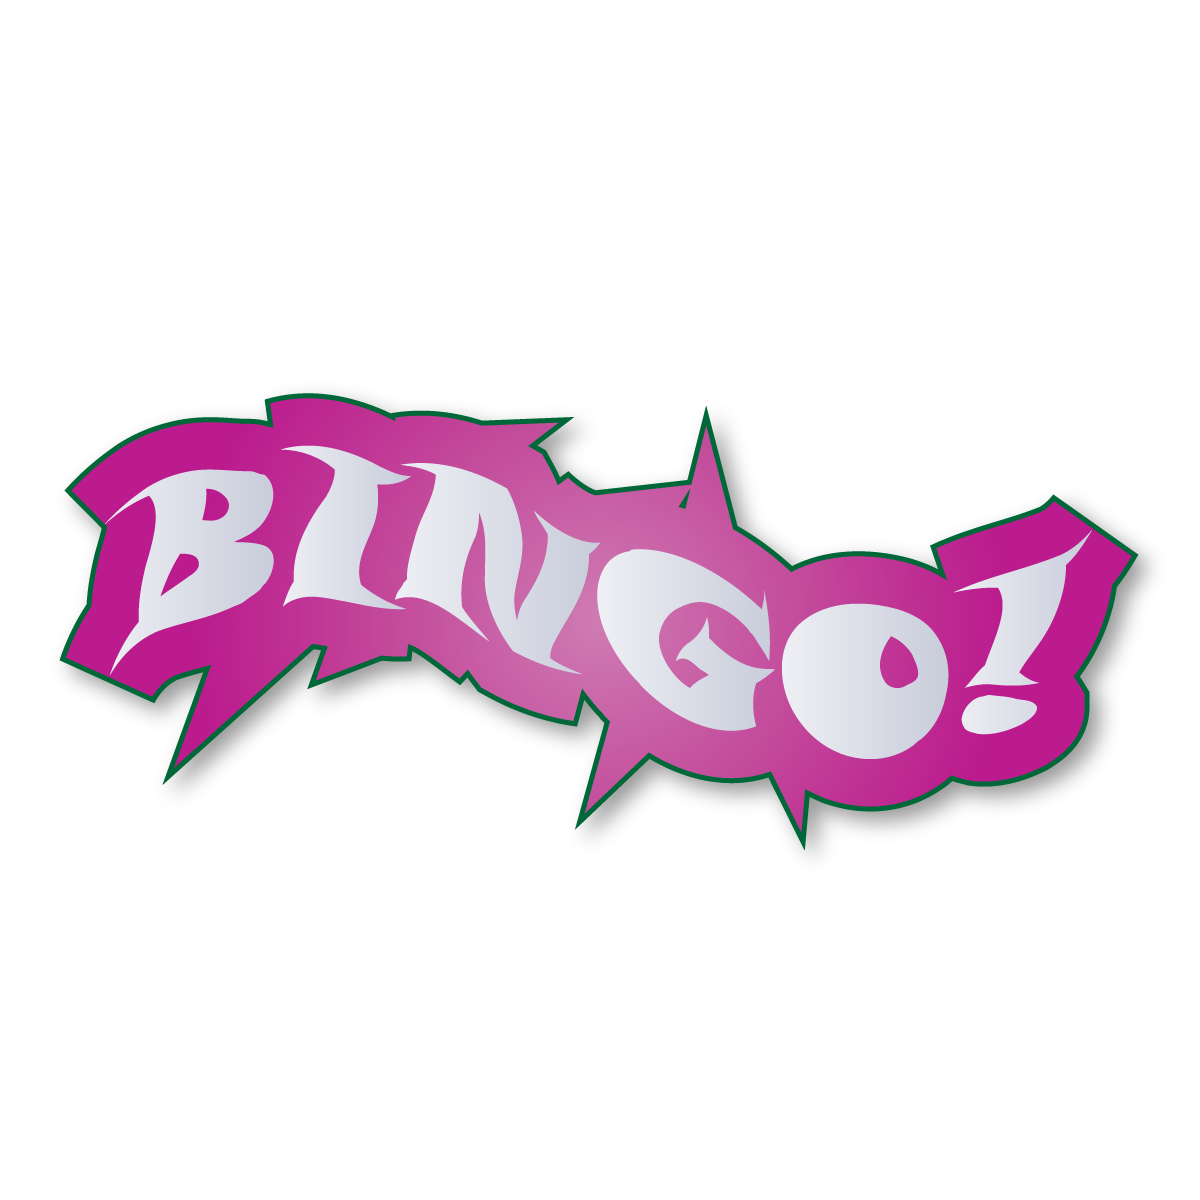 bingo bingo text